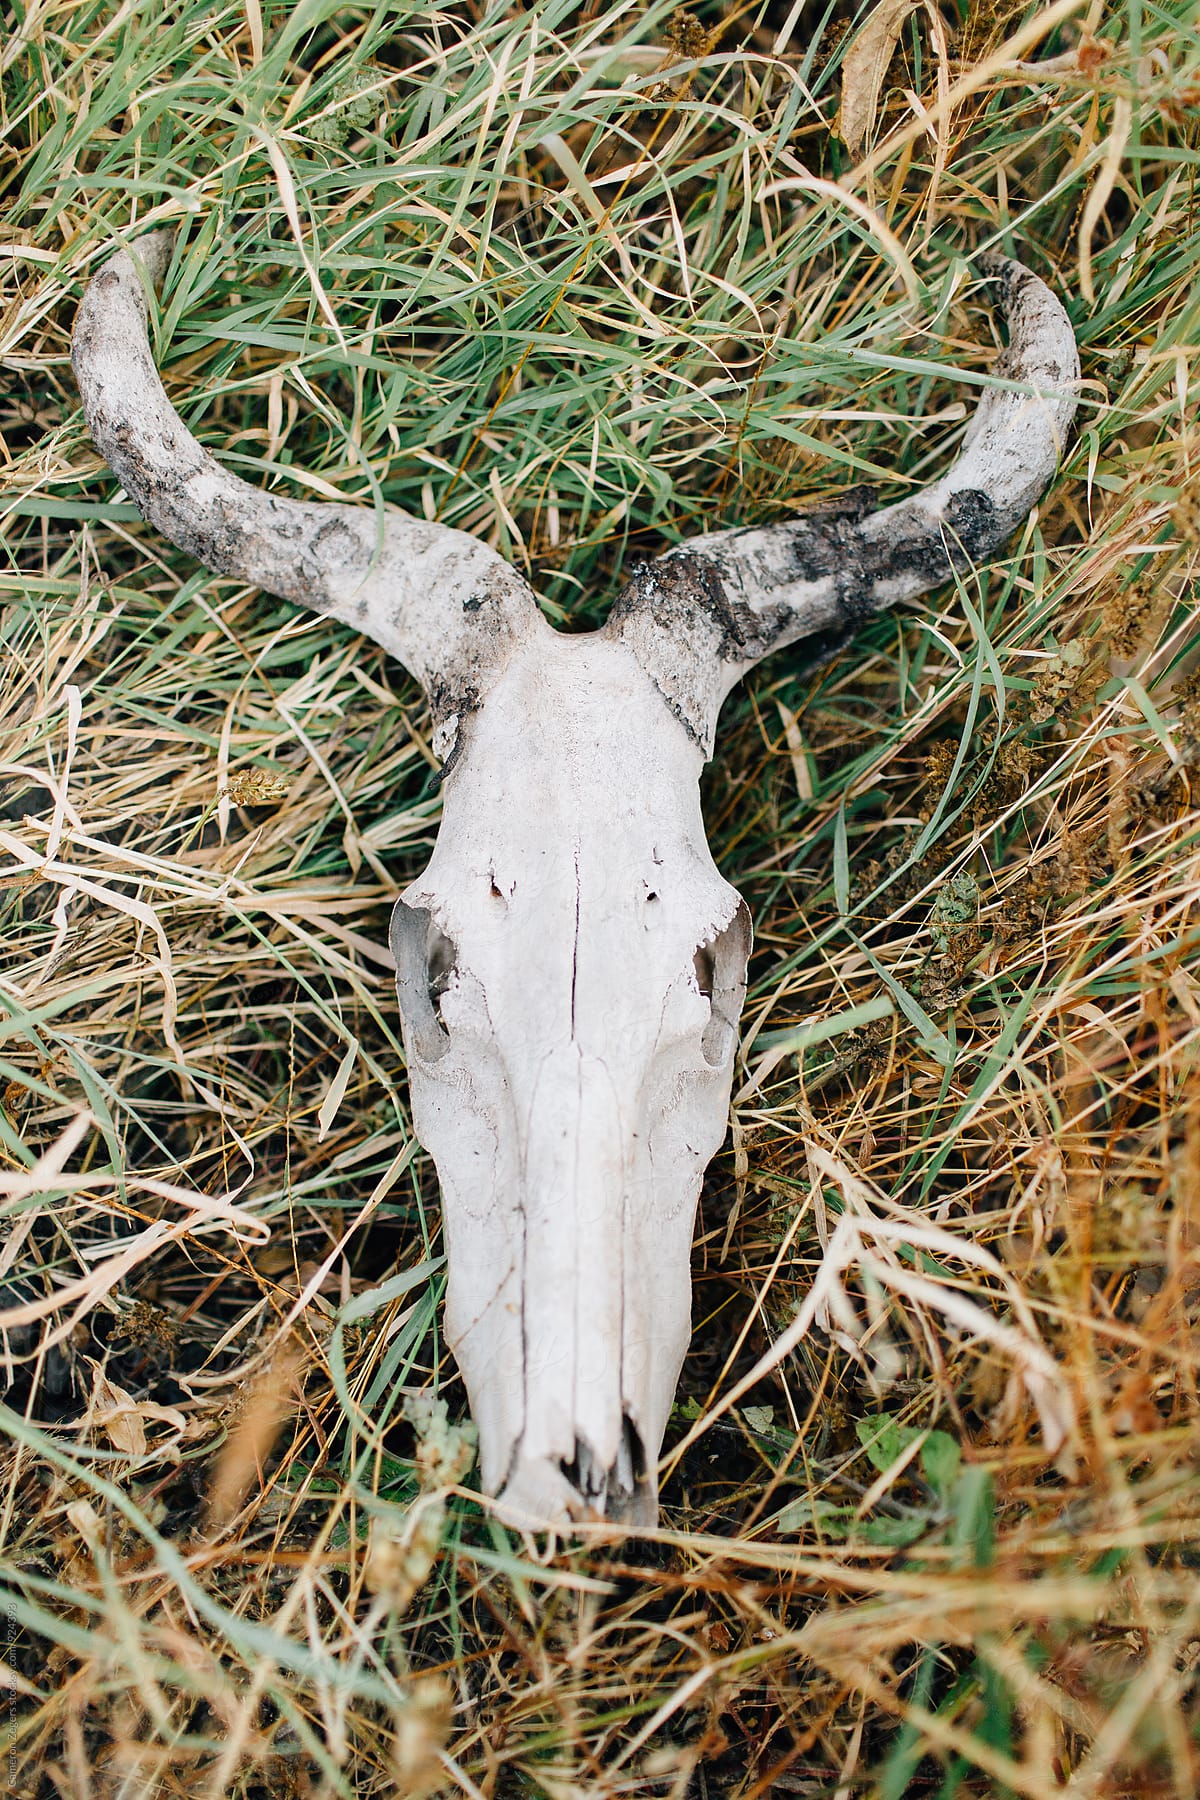 animal skull in grass